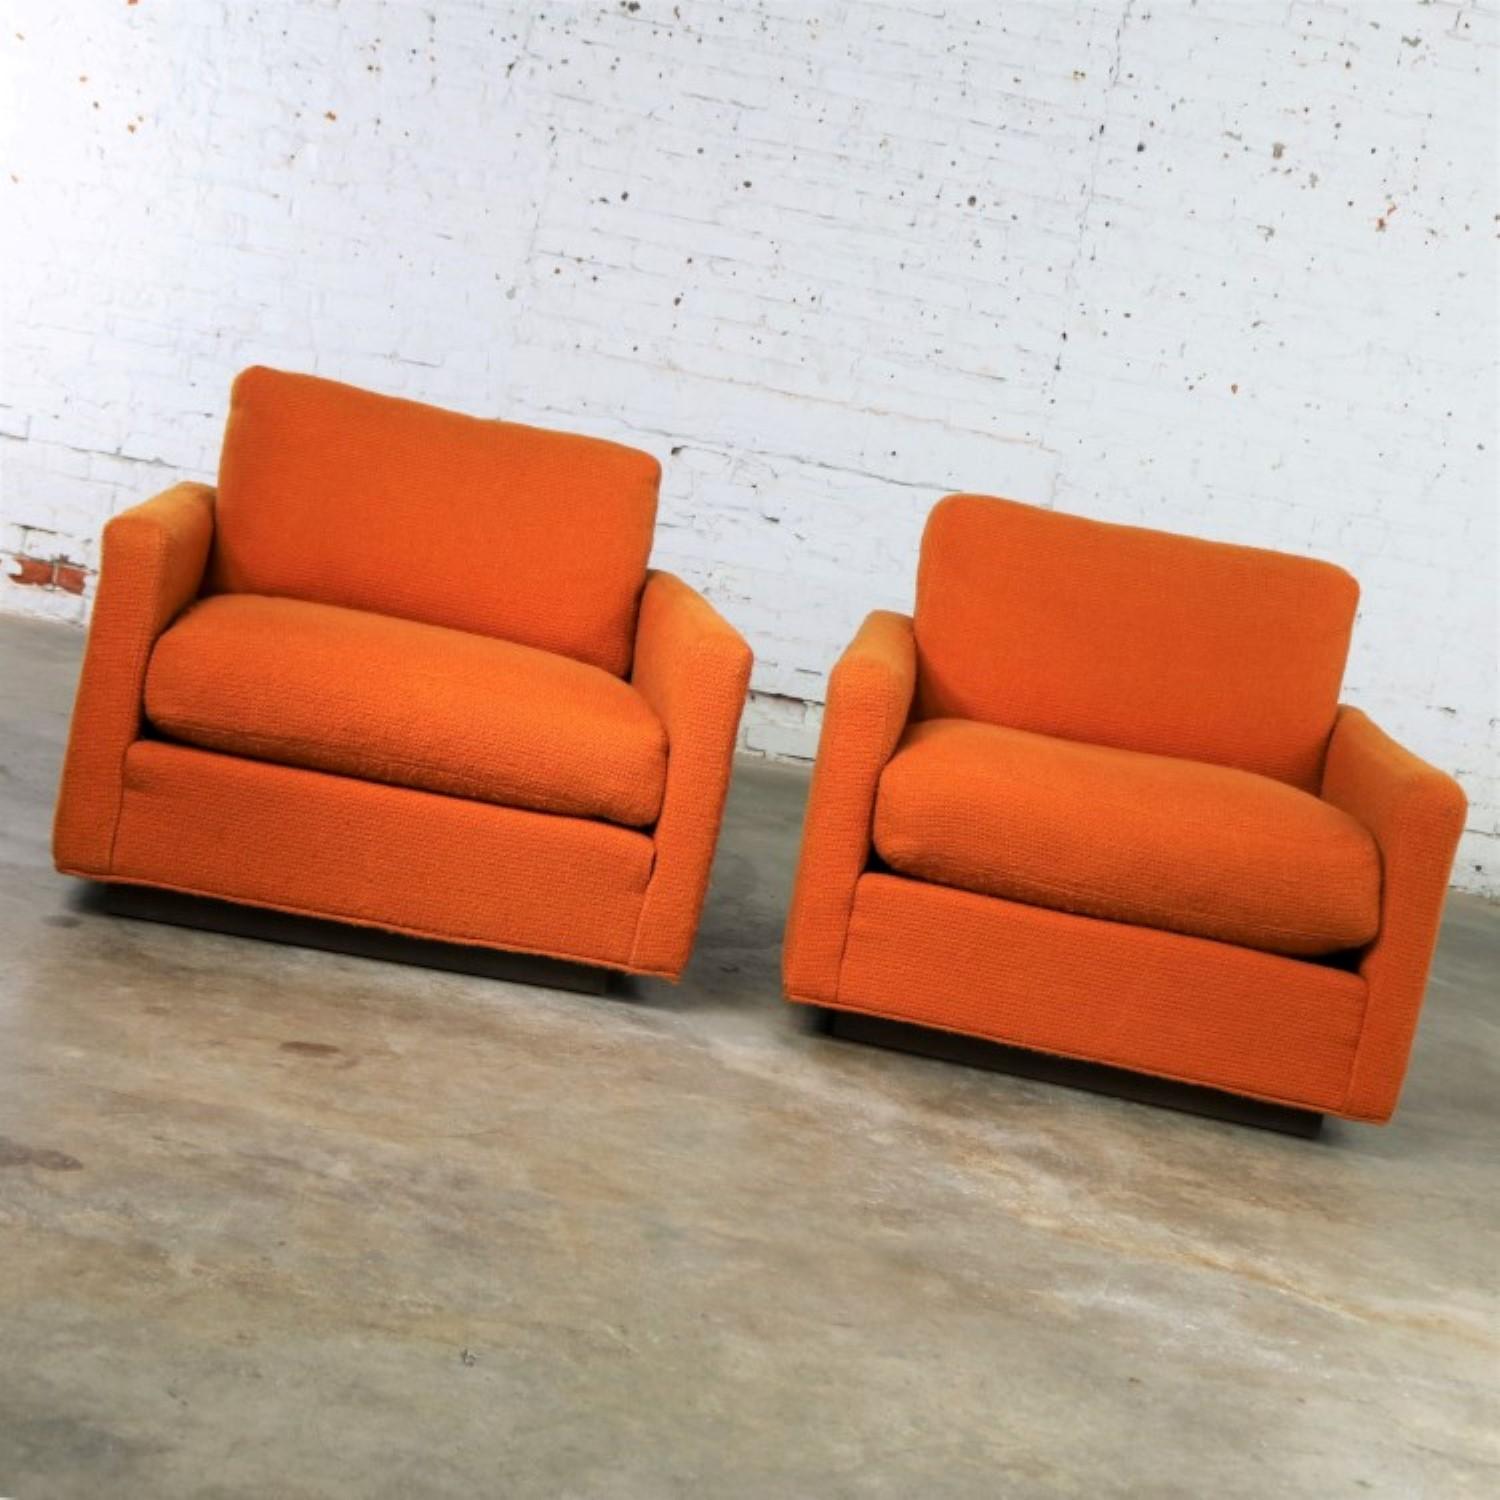 Mid-Century Modern Thayer Coggin Cube Lounge Chairs Orange Lawson Style Attributed to Milo Baughman